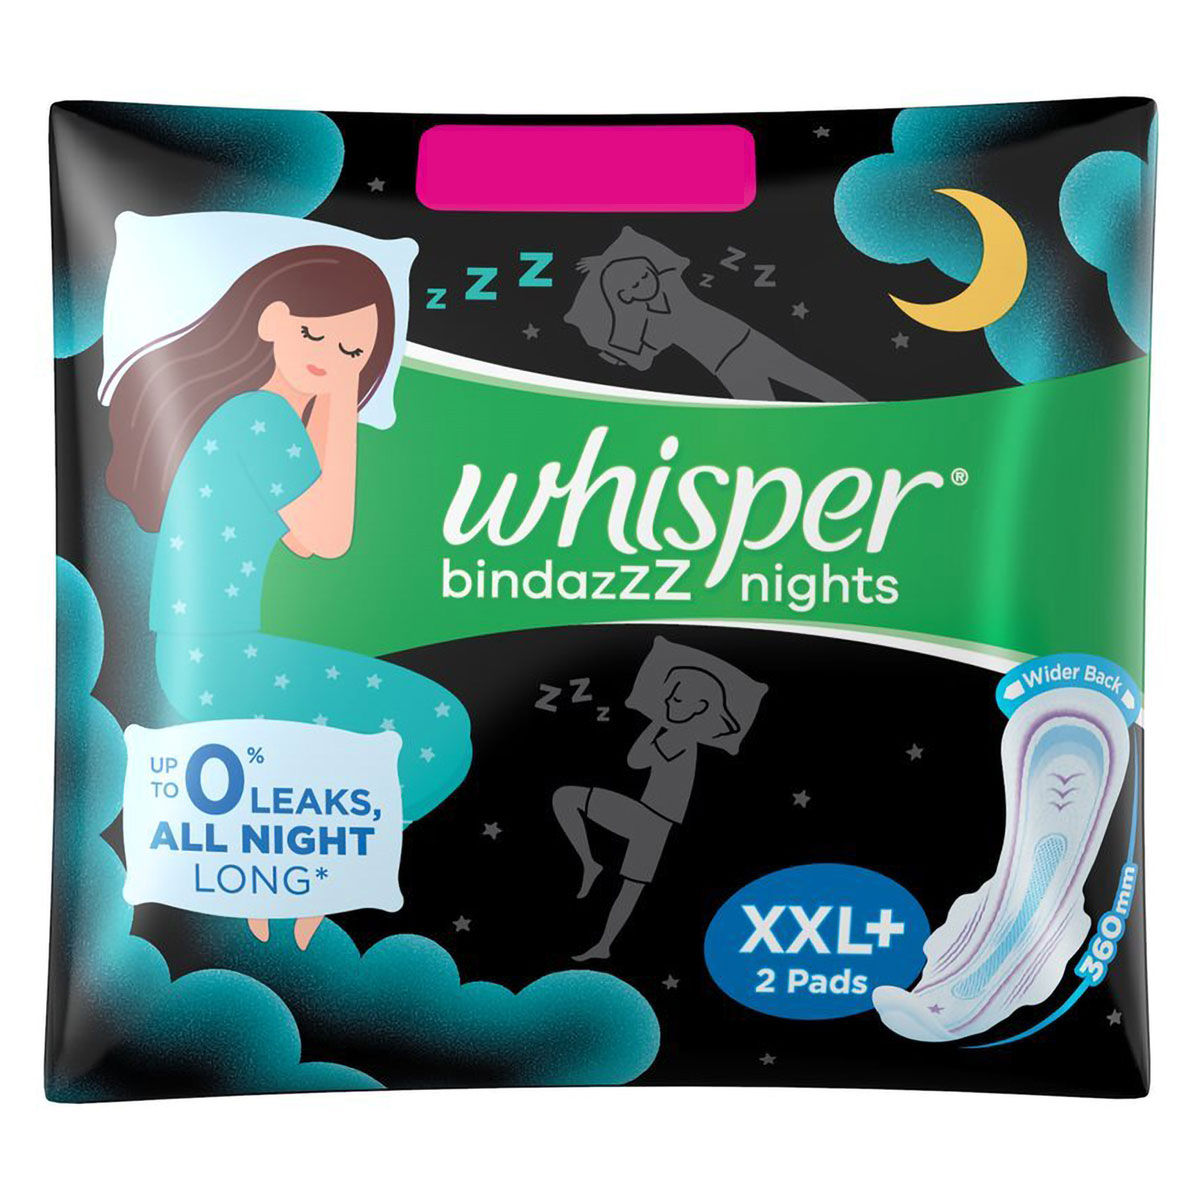 Whisper Bindazzz Nights Sanitary Pads XXL+, 2 Count Price, Uses